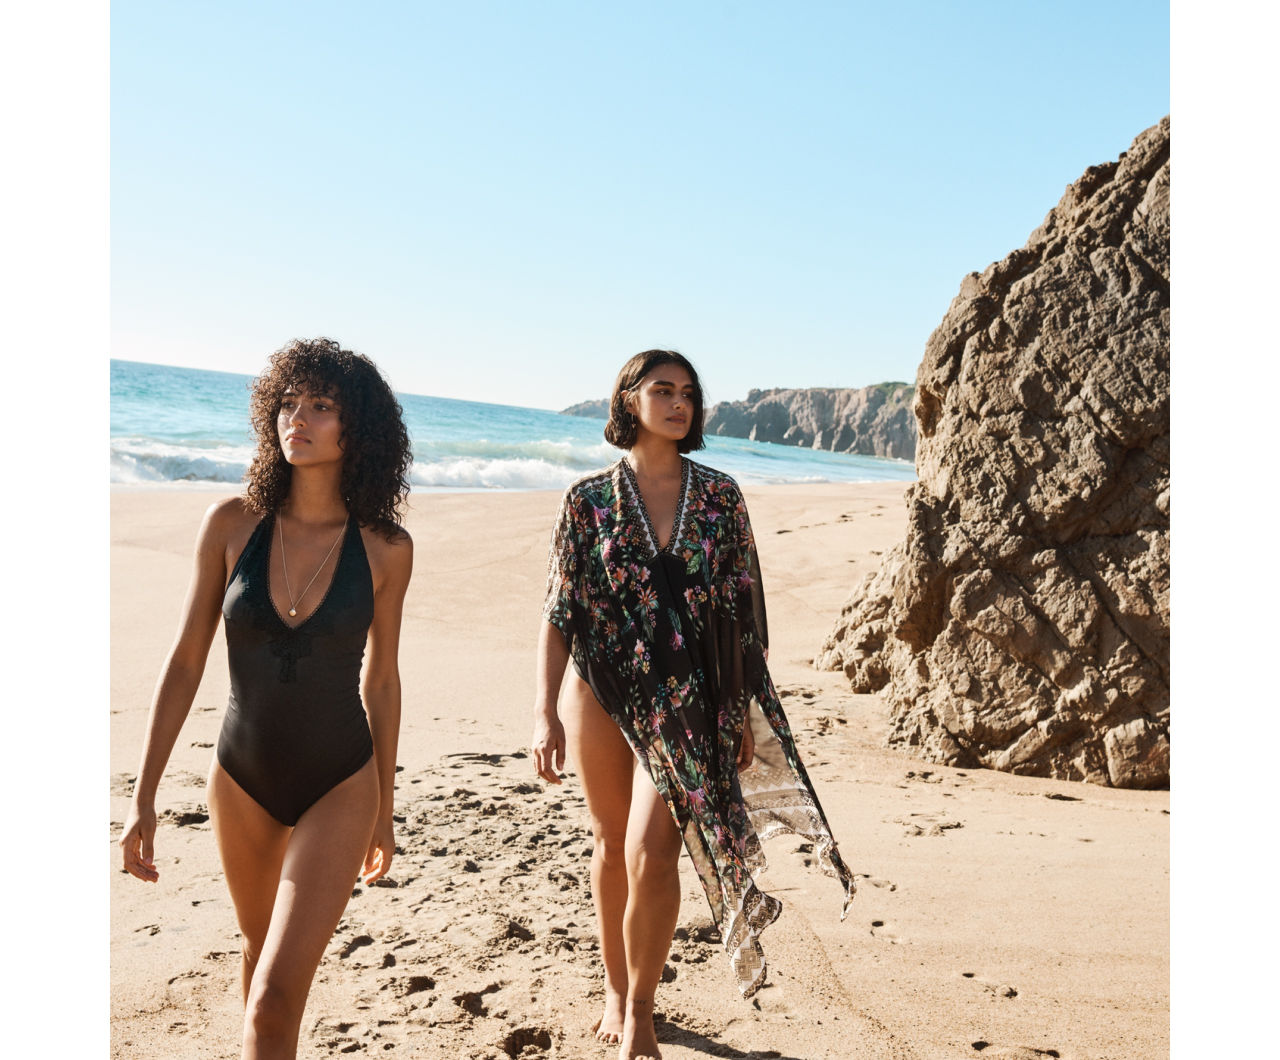 IN BEELD. Body positivity troef in nieuwe swimwear campagne van H&M